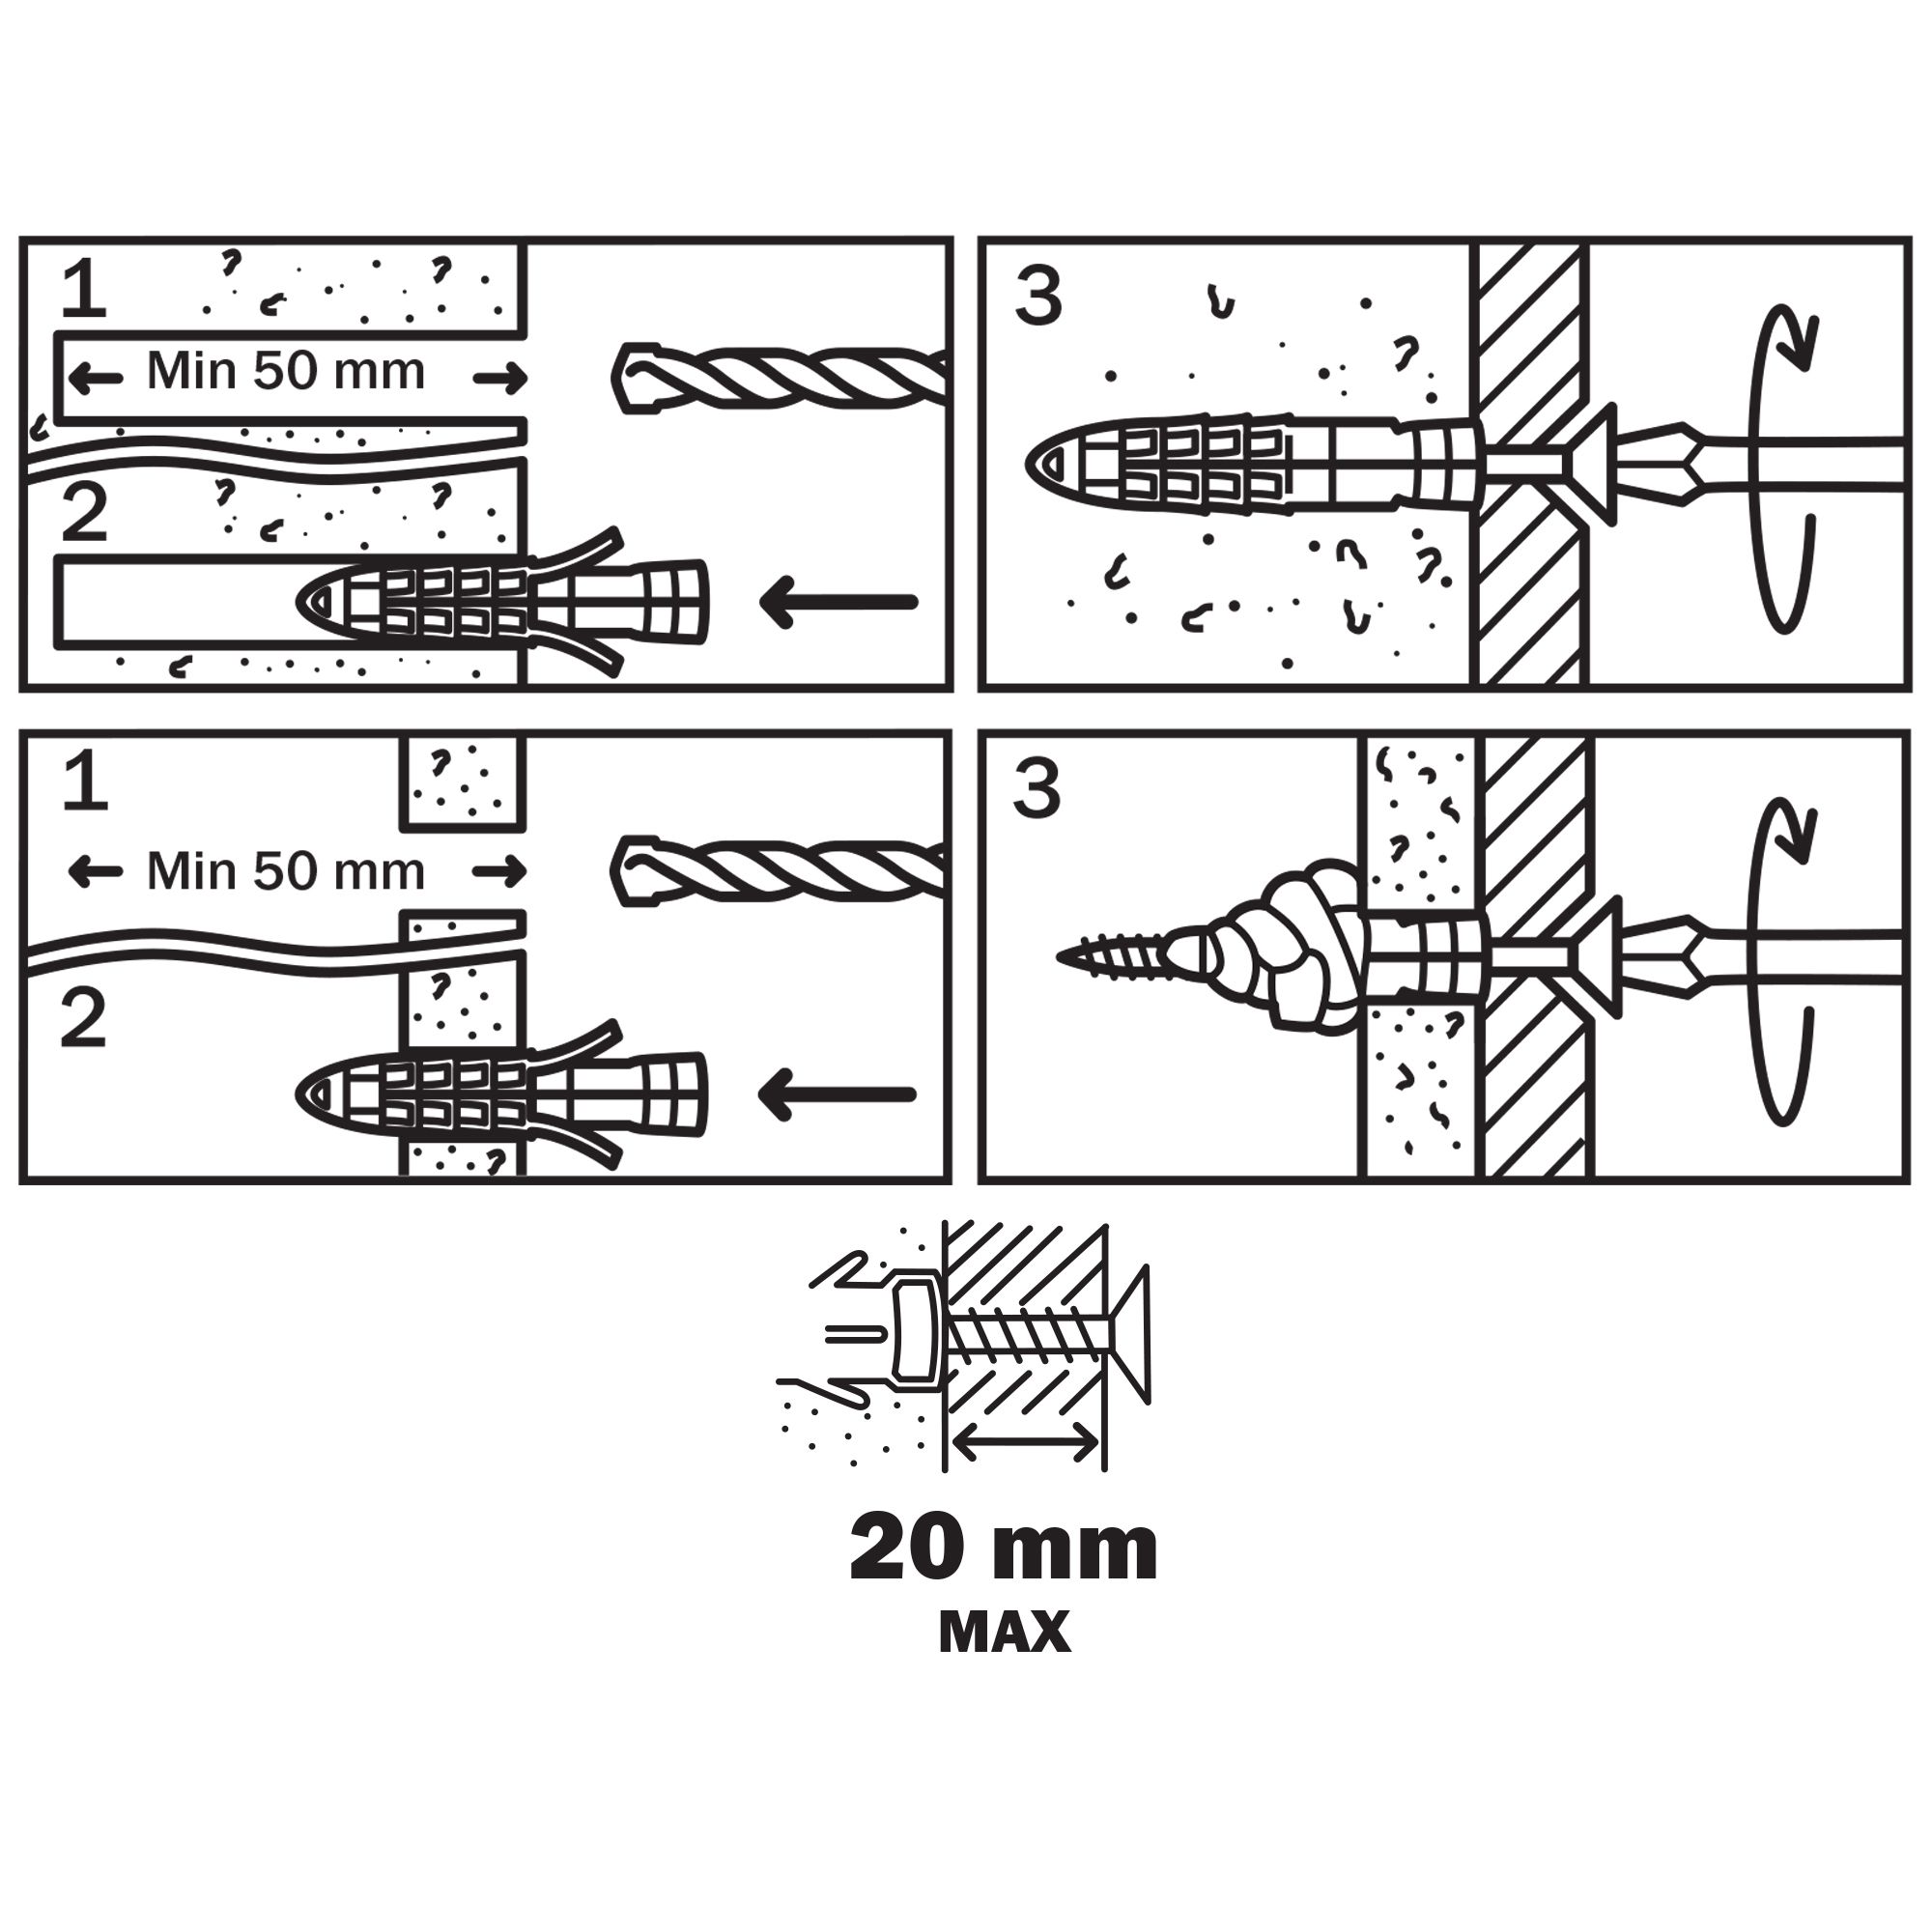 Diall Universal Grey Multi-purpose screw & wall plug (Dia)8mm (L)40mm, Pack of 4